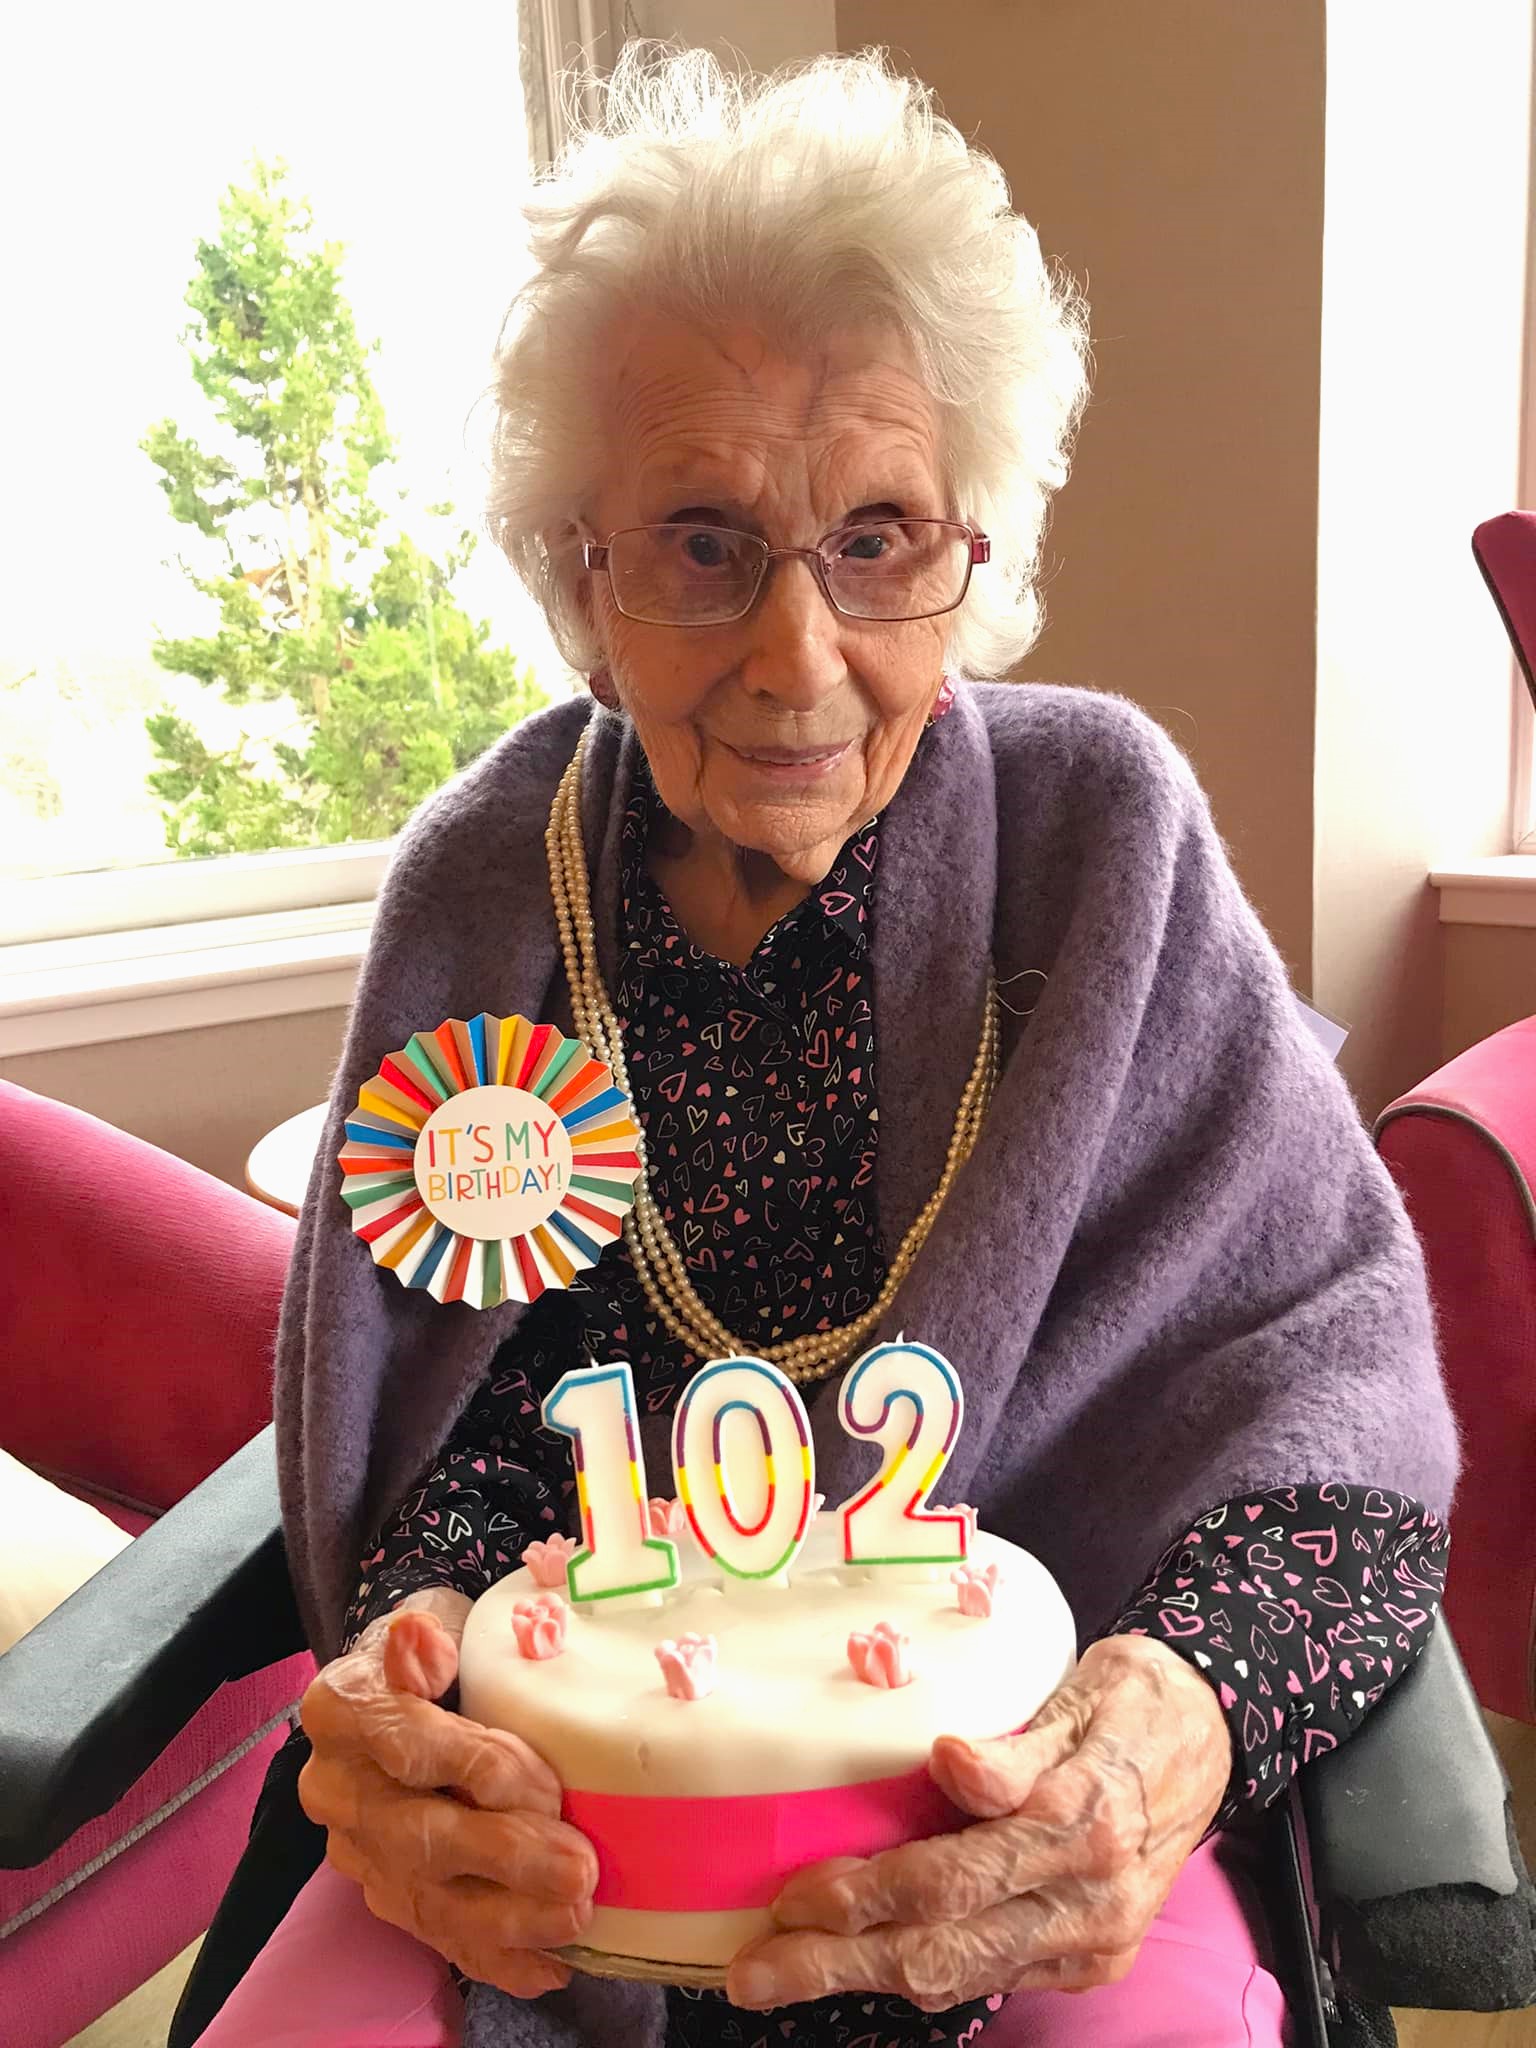 A photo of Balhousie Alastrean resident Isobel celebrating her 102nd birthday.